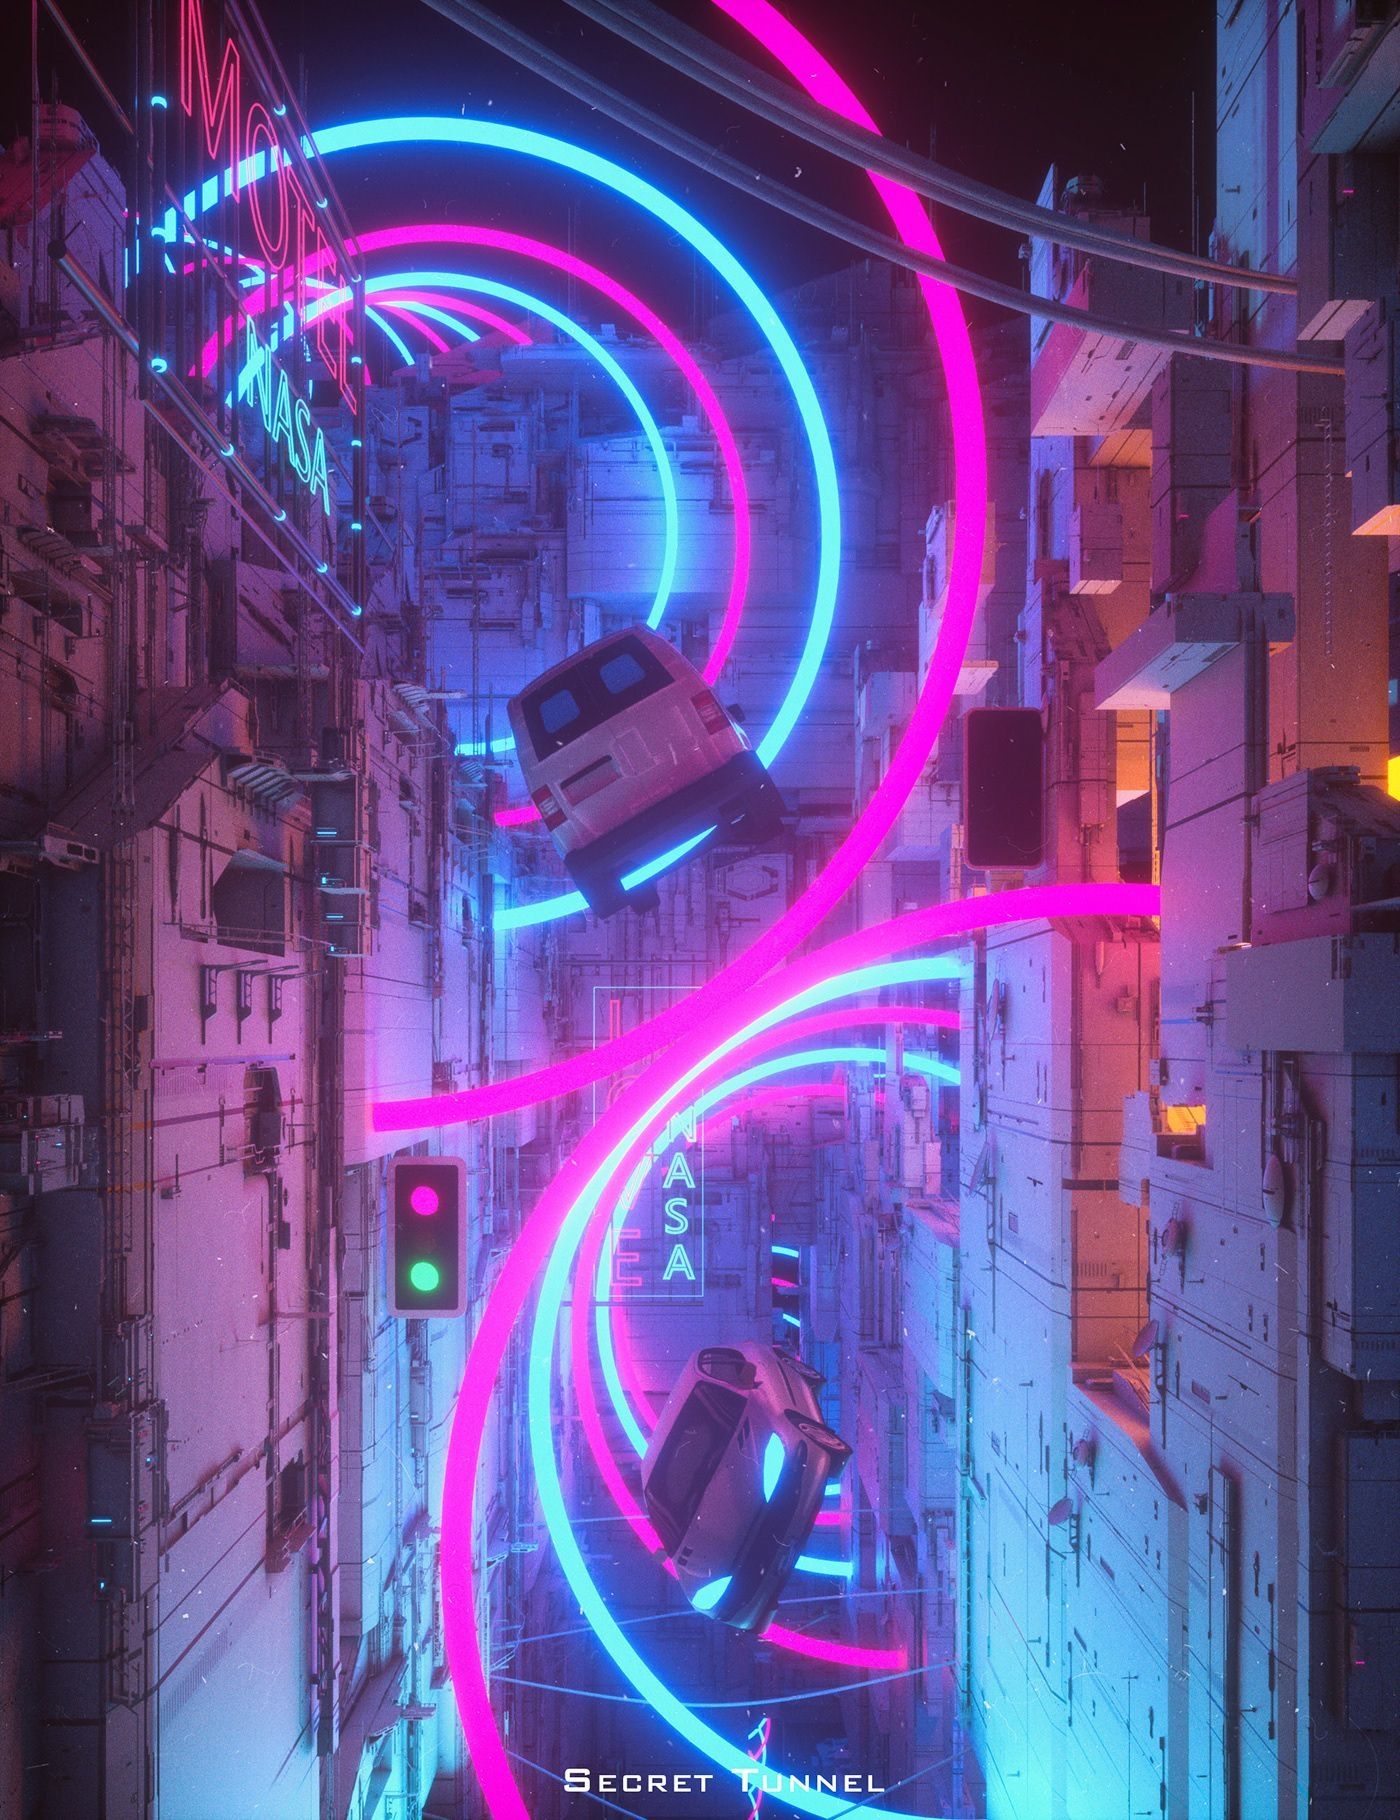 Cyberpunk city street with neon lights and a traffic light - Neon blue